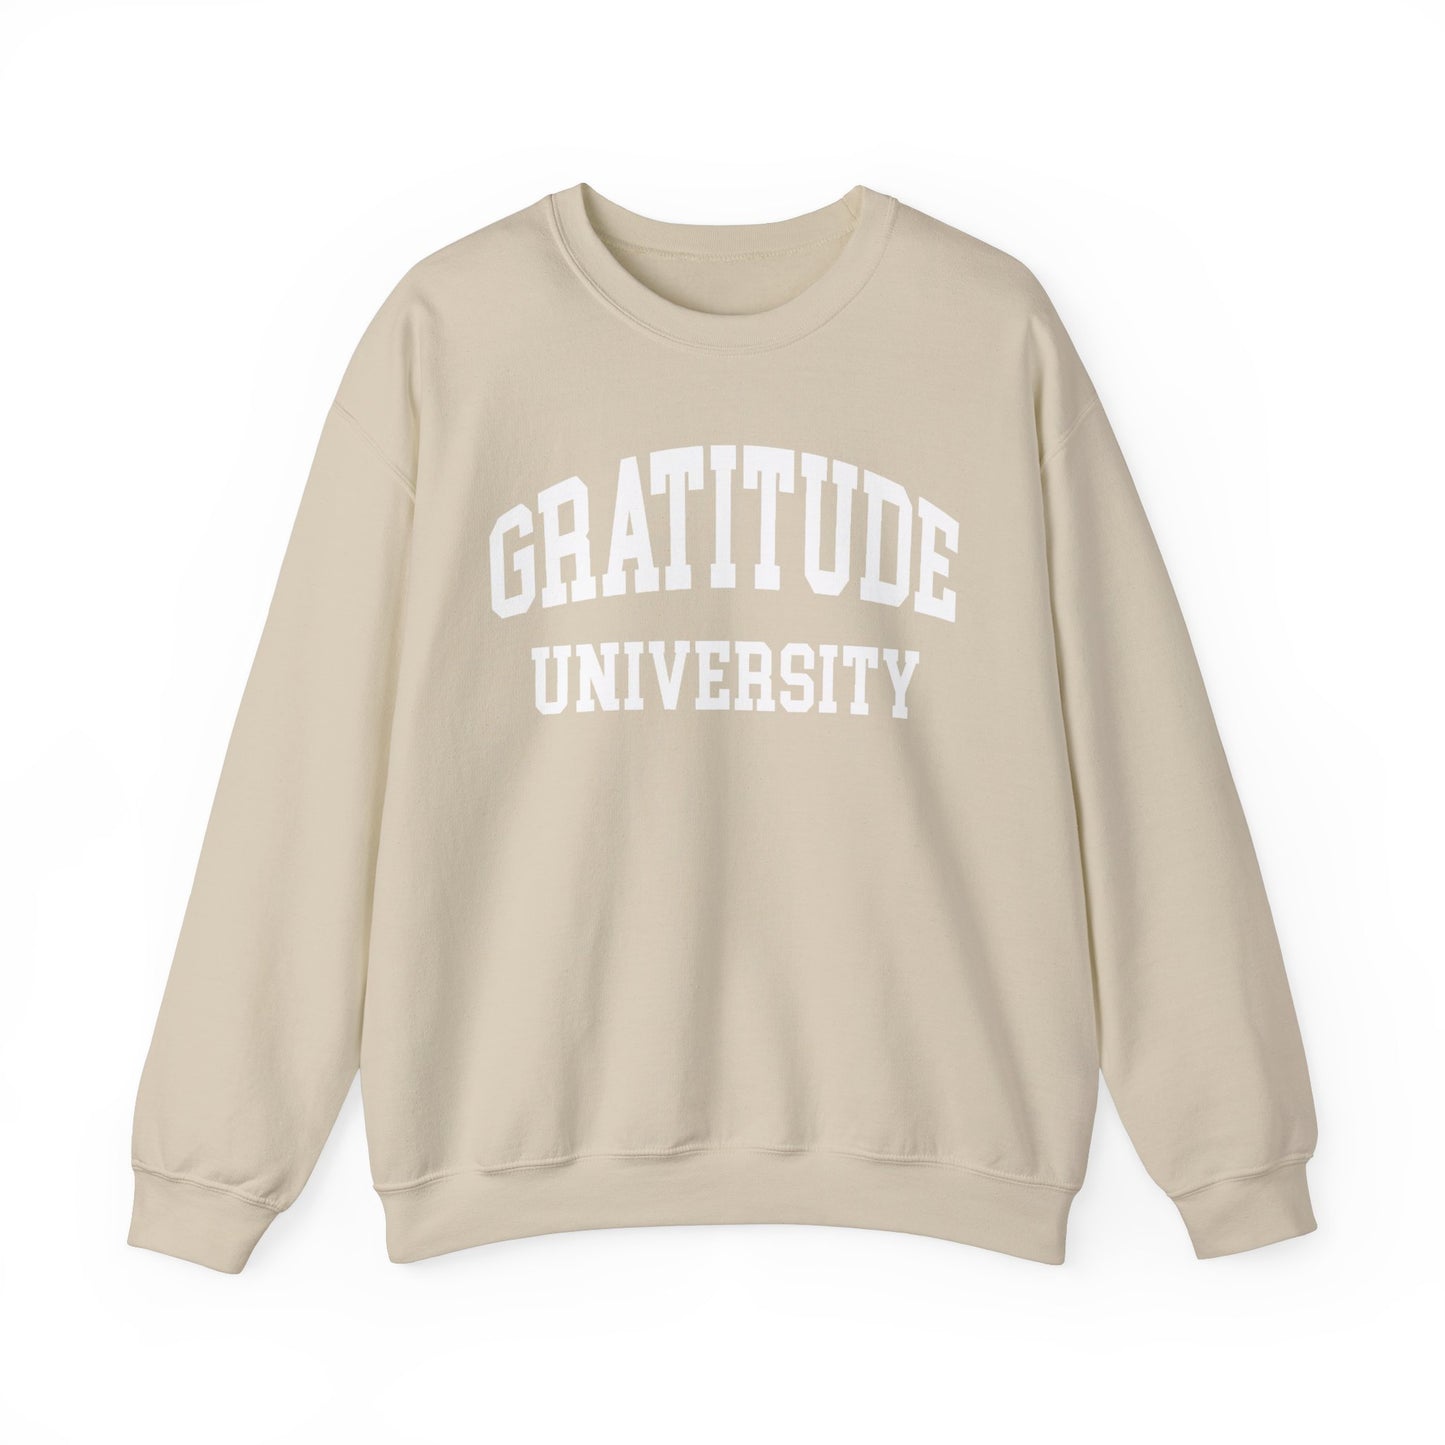 "Gratitude University" Crewneck Sweatshirt